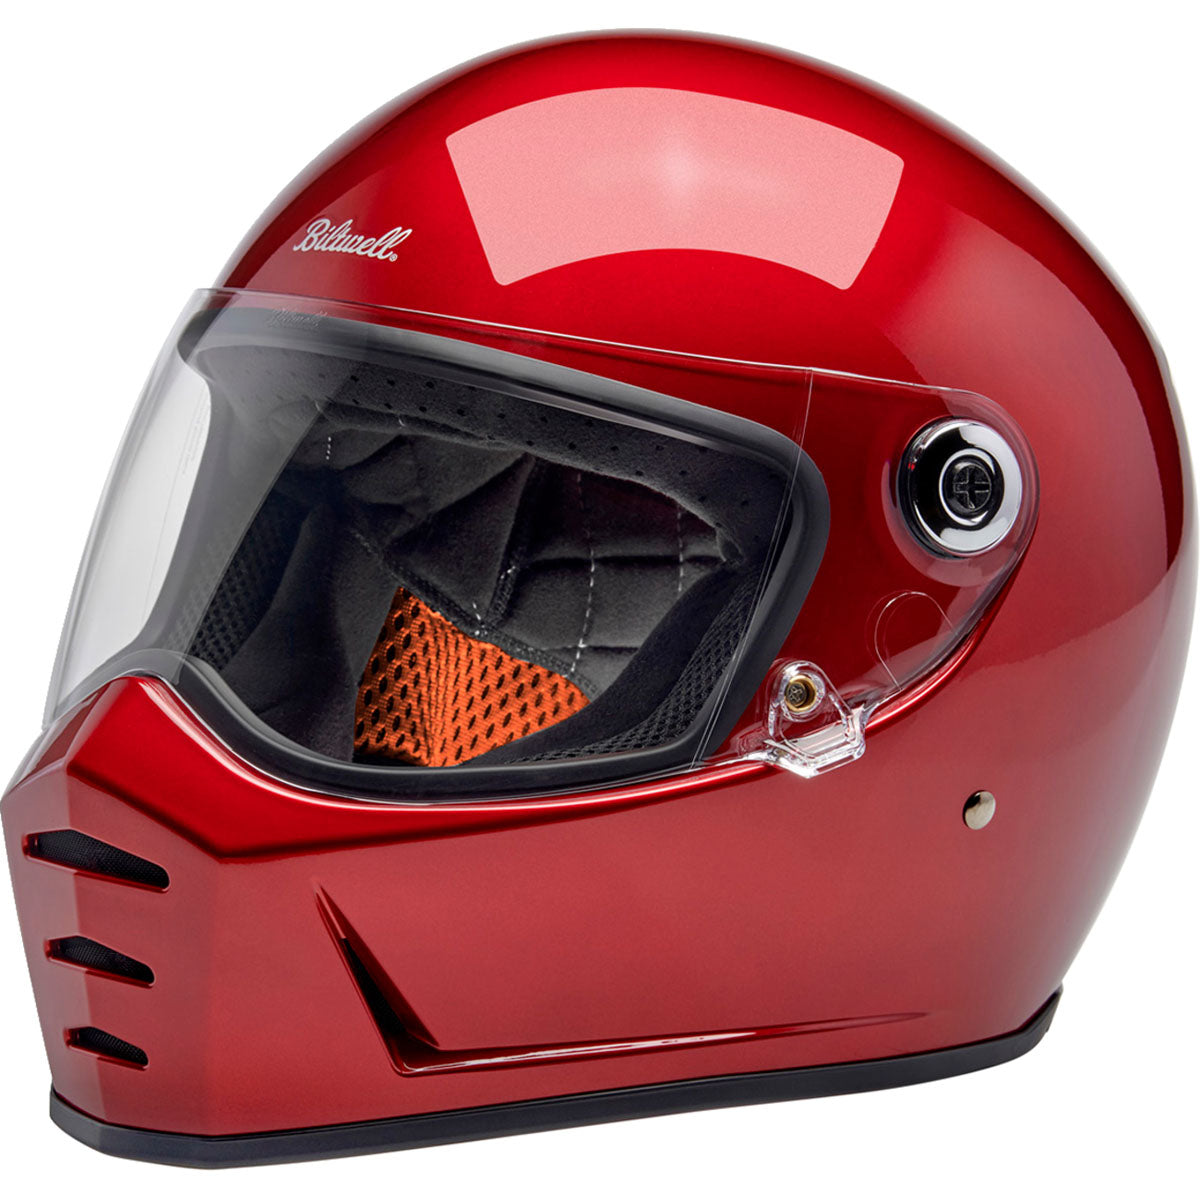 Biltwell Lane Splitter Helmet - Metallic Cherry Red